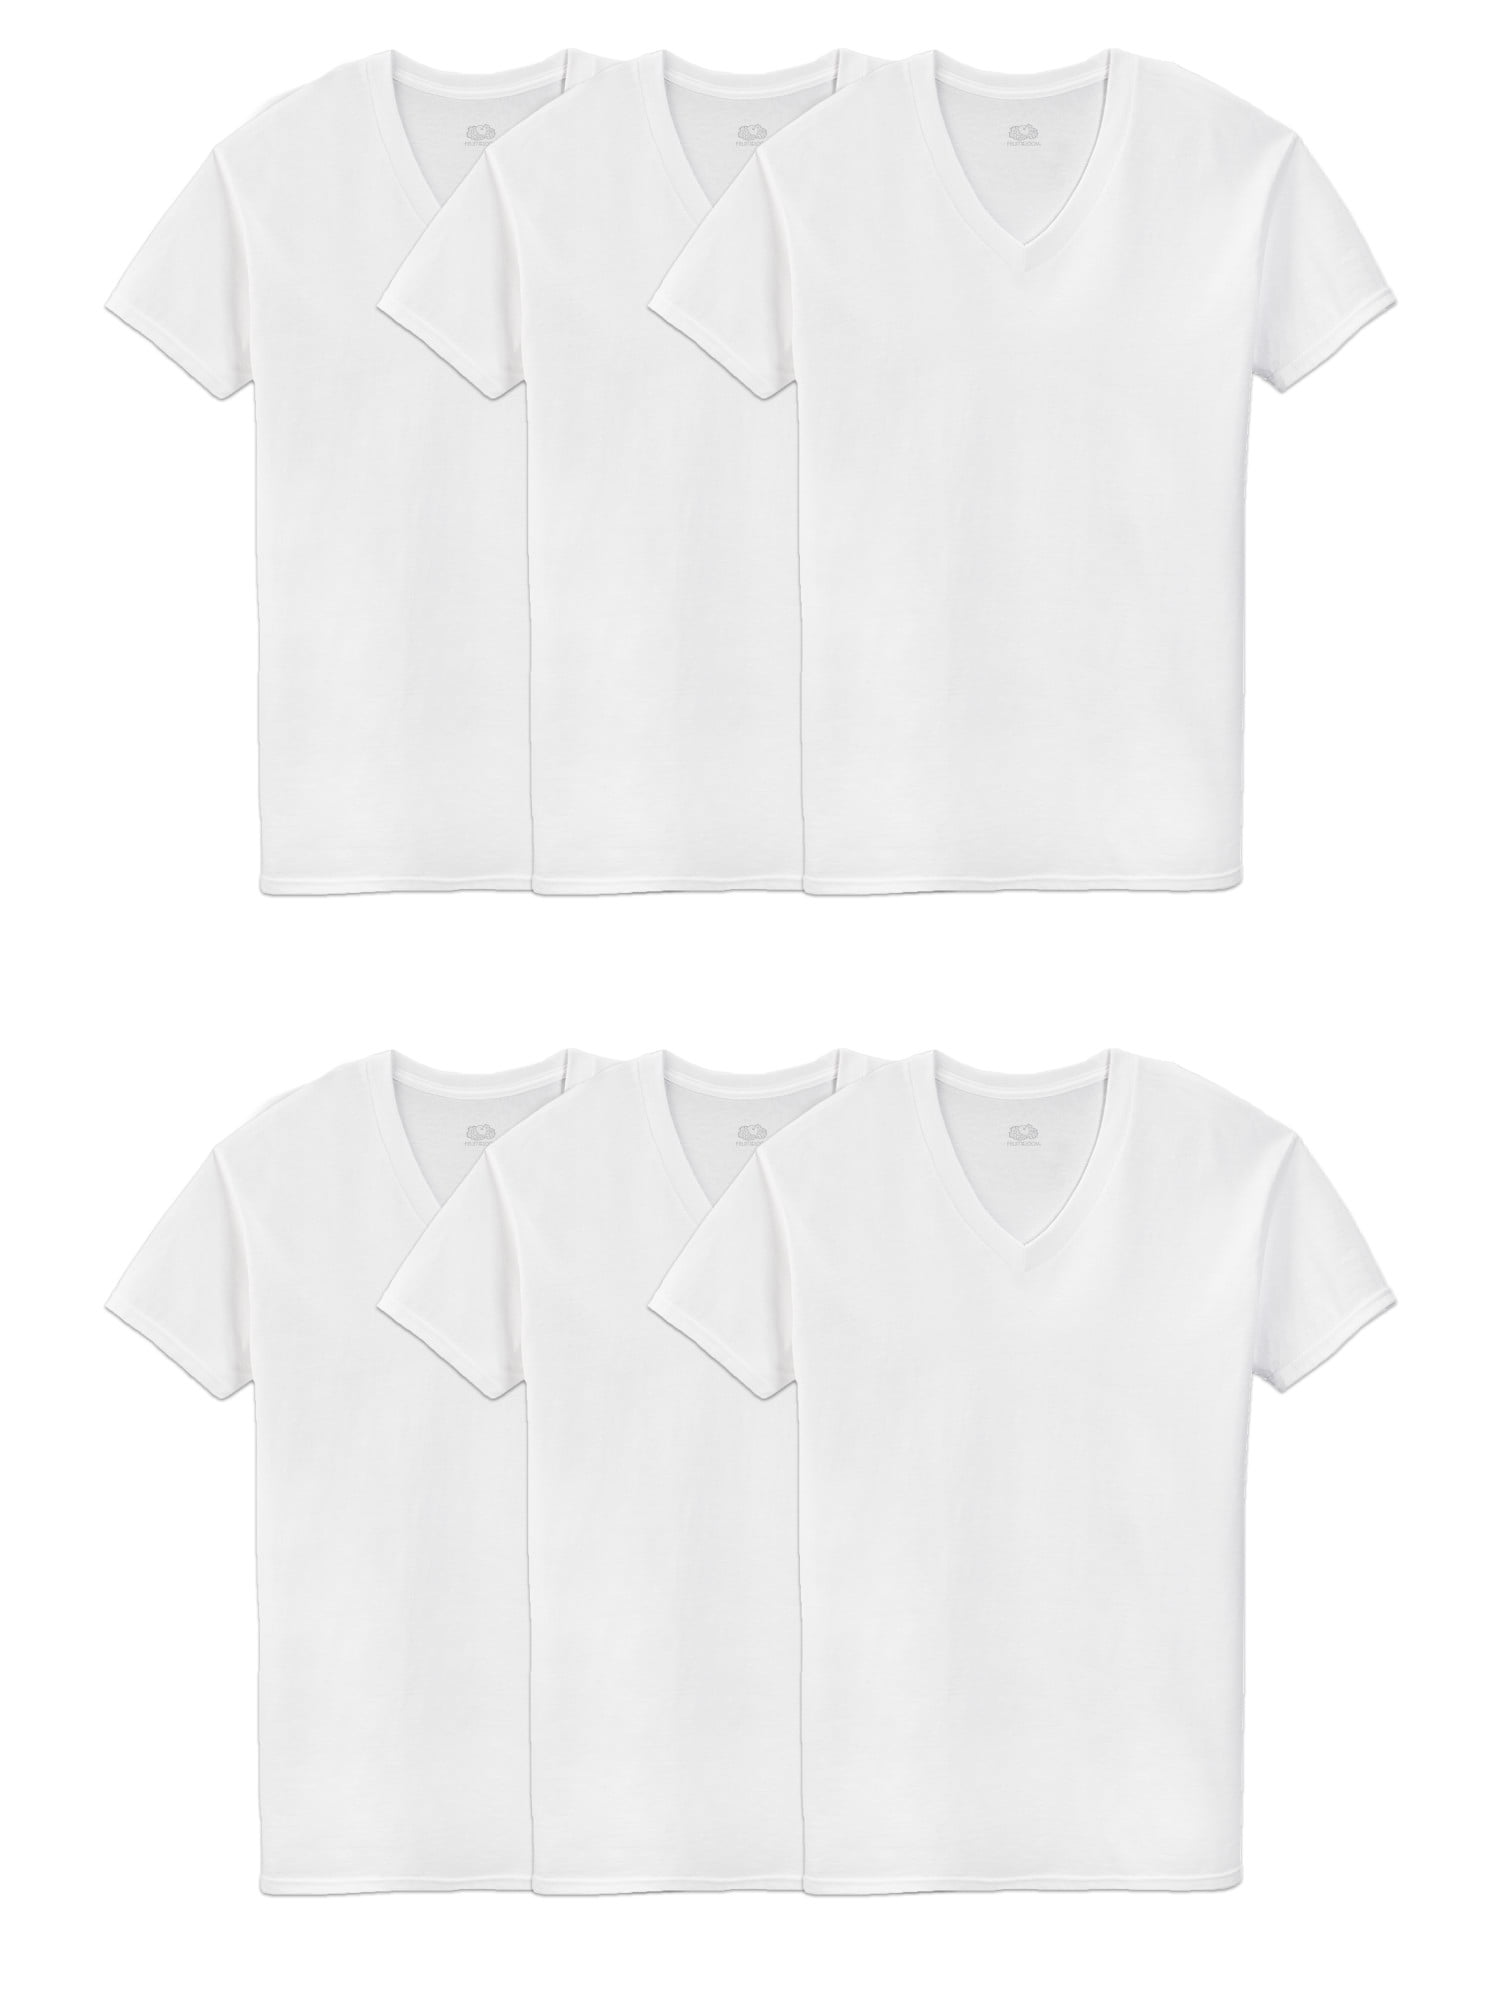 Fruit of the Loom Men's White V-Neck Undershirts, 6 Pack, Sizes S-3XL ...